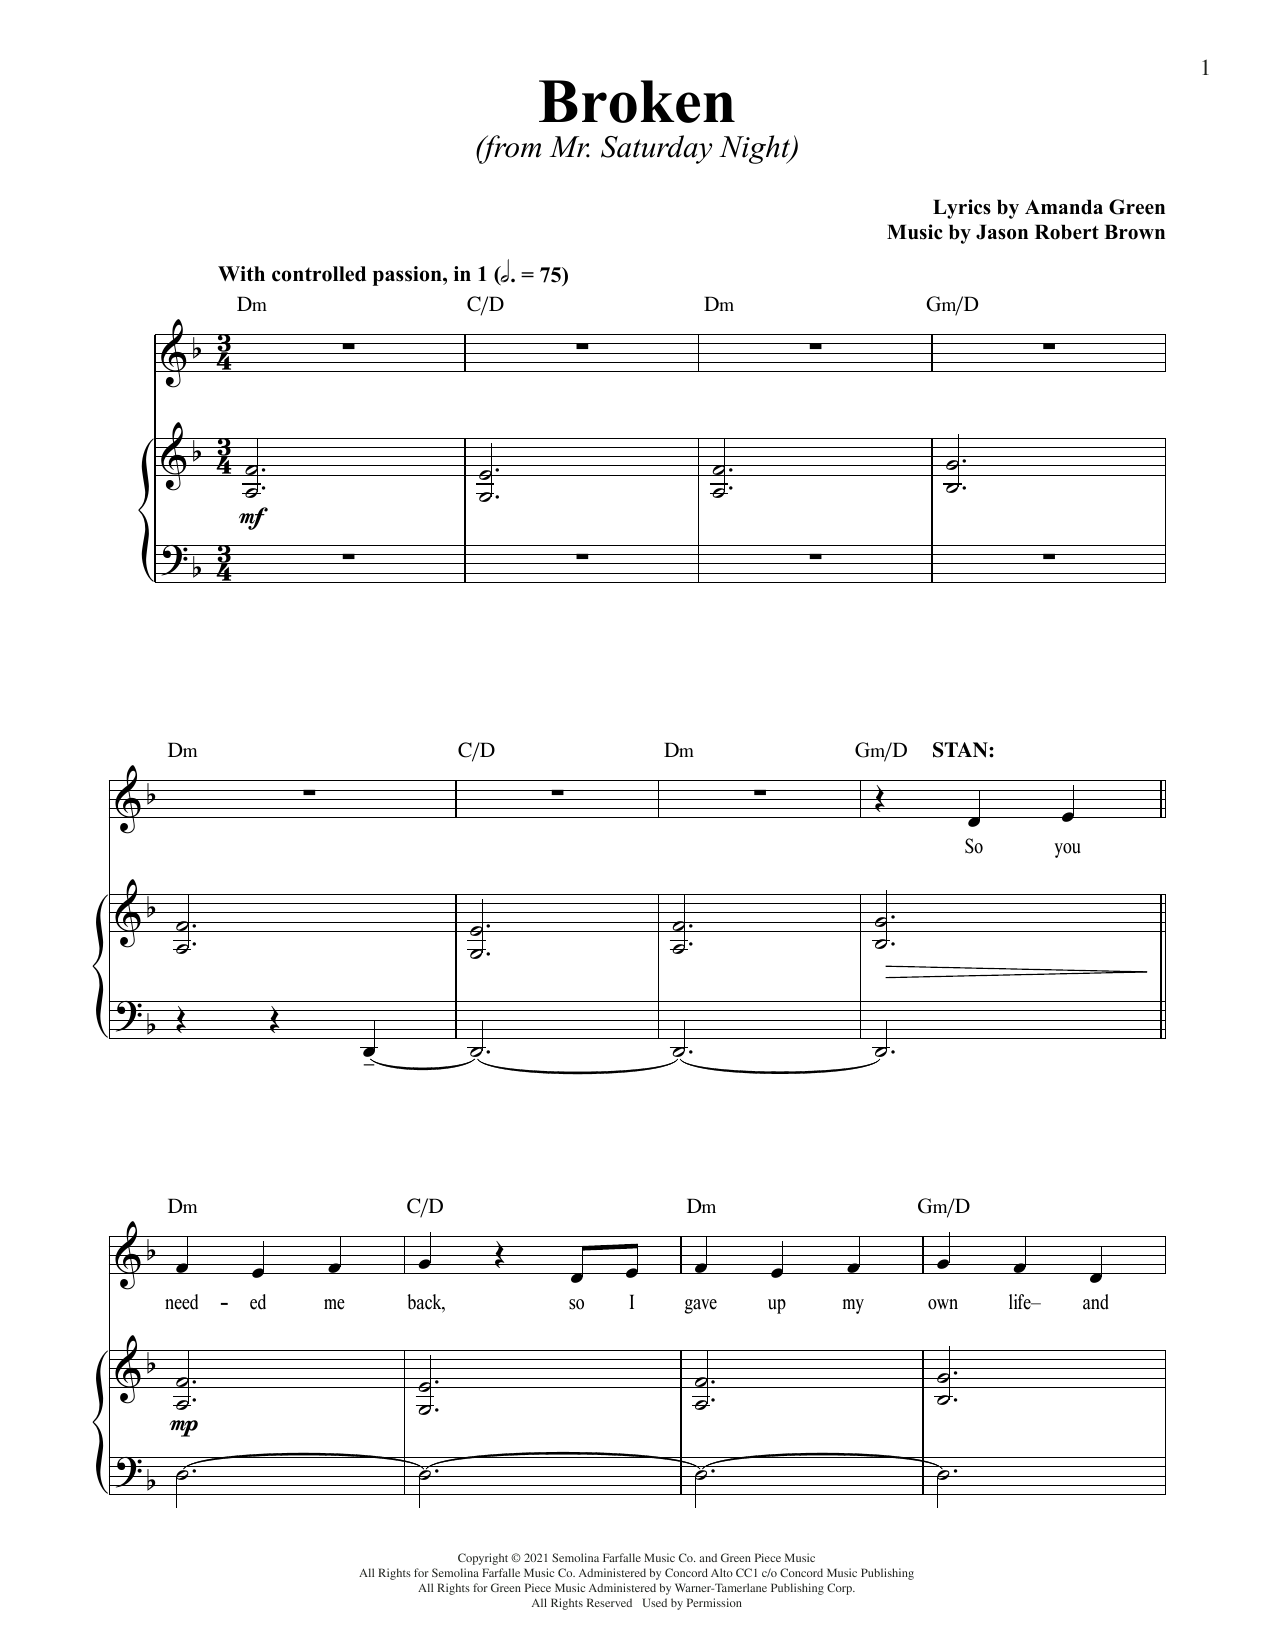 Jason Robert Brown and Amanda Green Broken (from Mr. Saturday Night) Sheet Music Notes & Chords for Piano & Vocal - Download or Print PDF